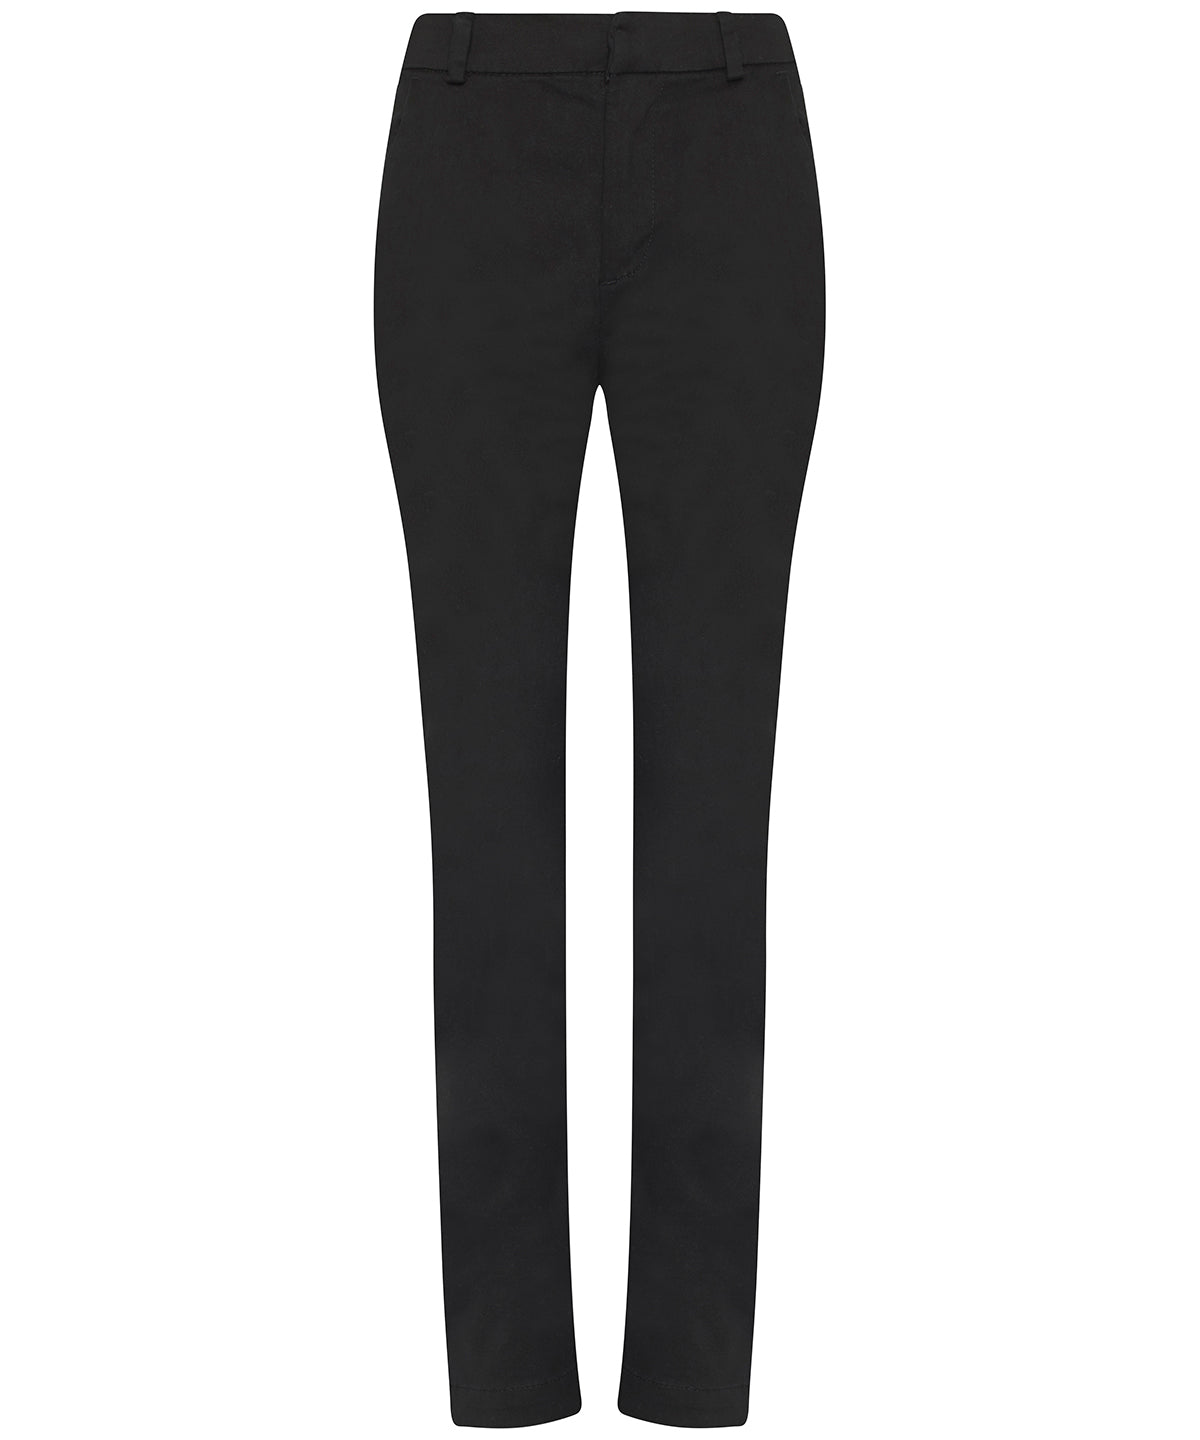 Personalised Trousers - Black AWDis So Denim Women's Lily slim chinos